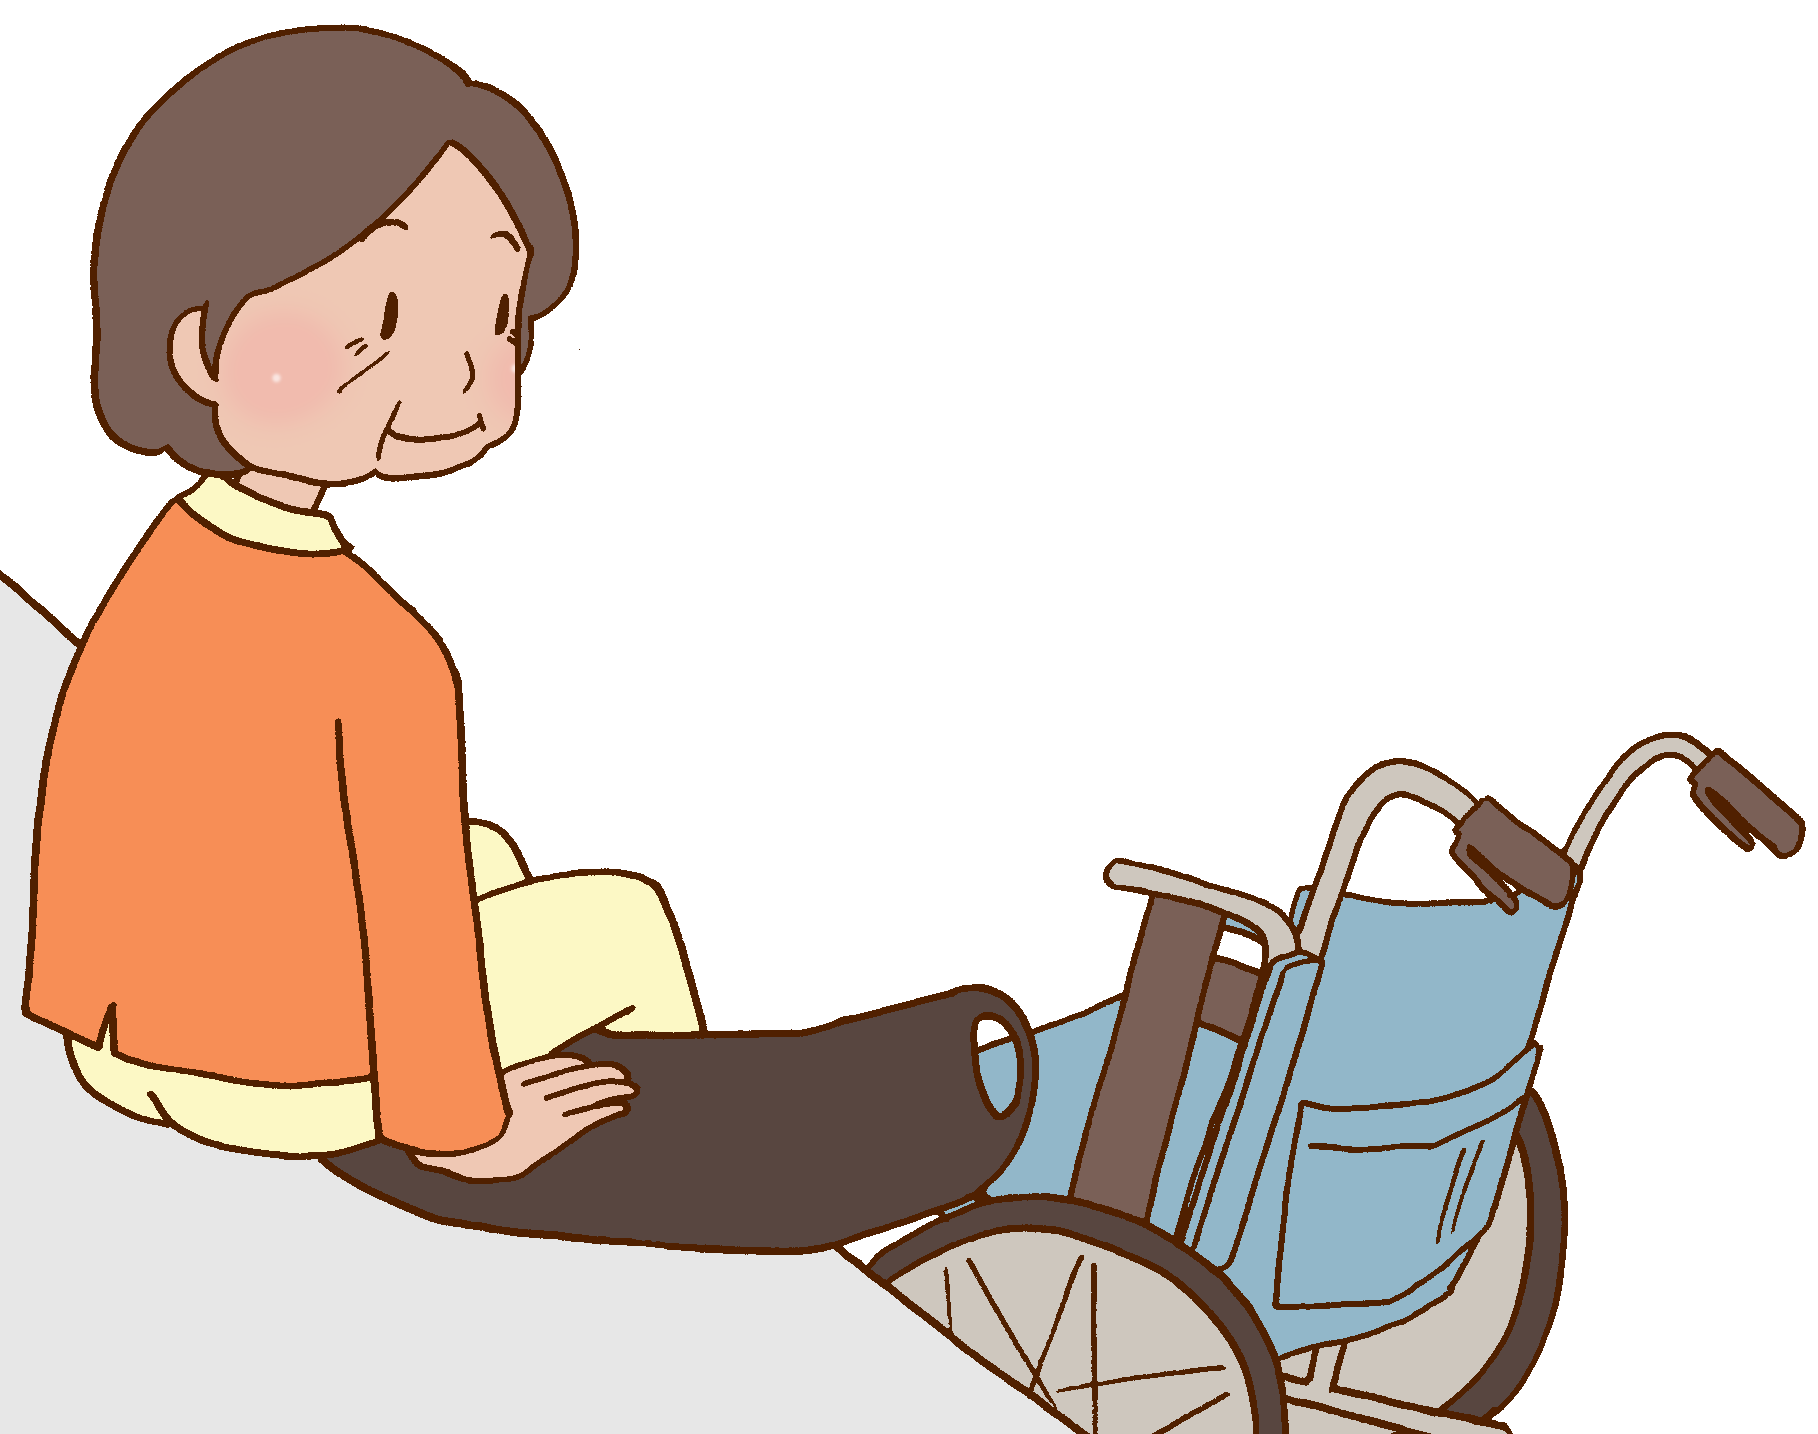 Otナガミネのリハビリイラスト集 患者 入所者 入居者 利用者 移乗動作 Adl 寝室 福祉用具 スライドボード 移乗ボード 車椅子 自立